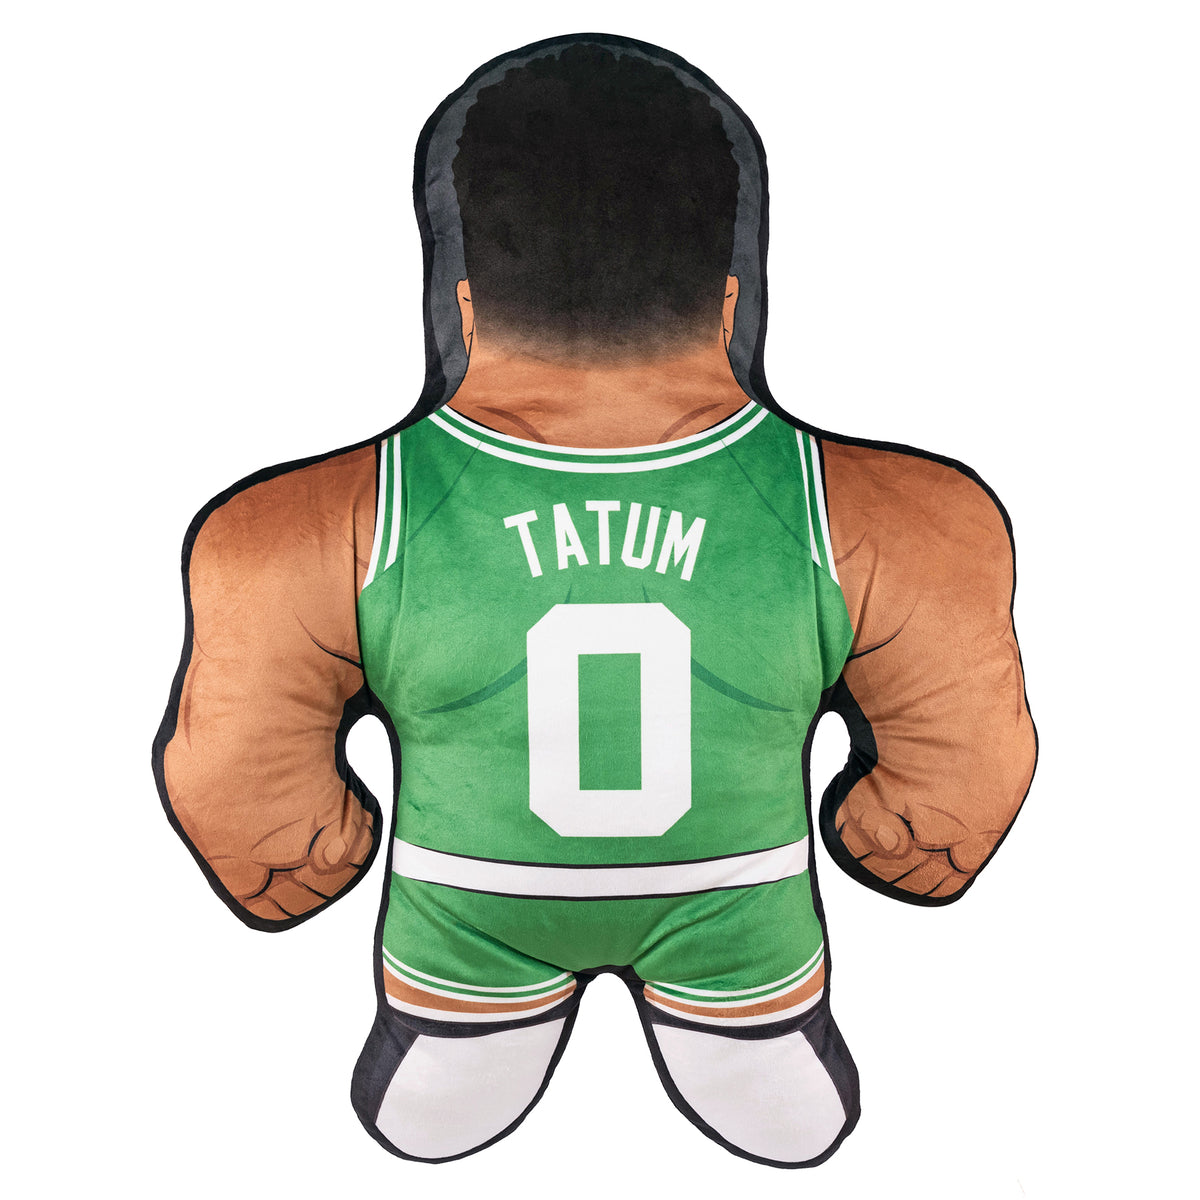 Boston Celtics Jayson Tatum 24&quot; Bleacher Buddy